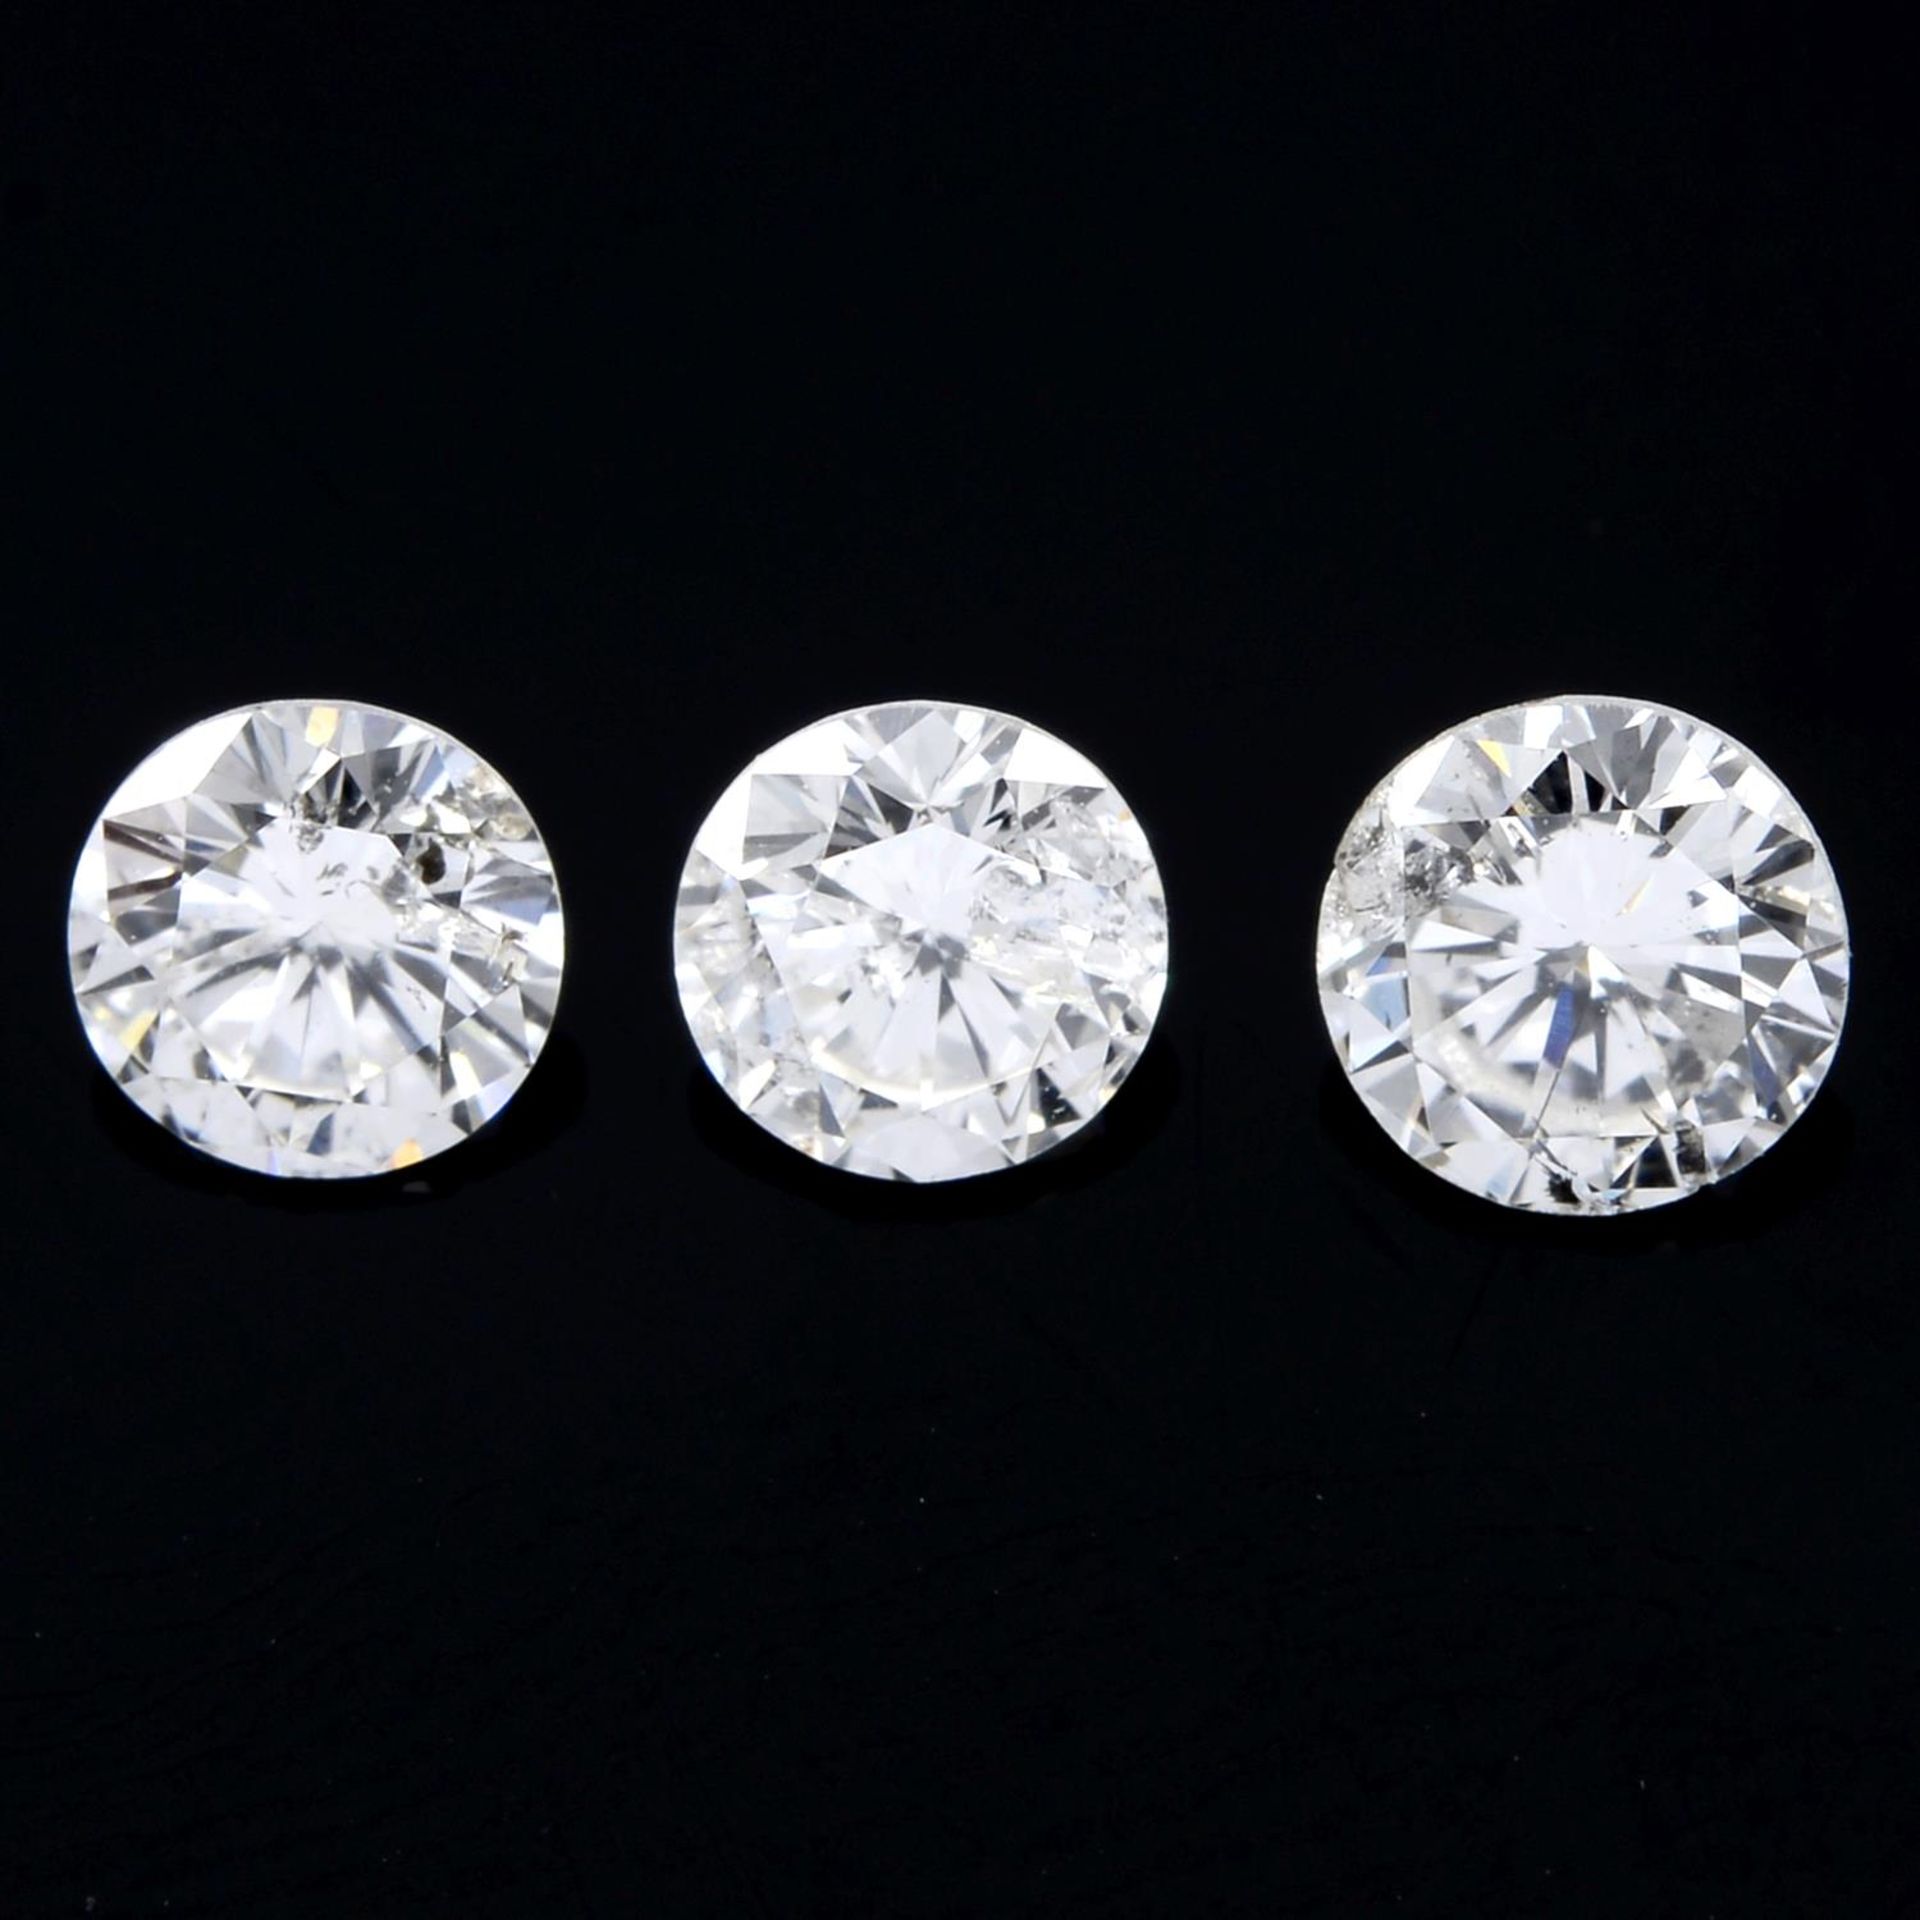 Three brilliant-cut diamonds, 0.51ct